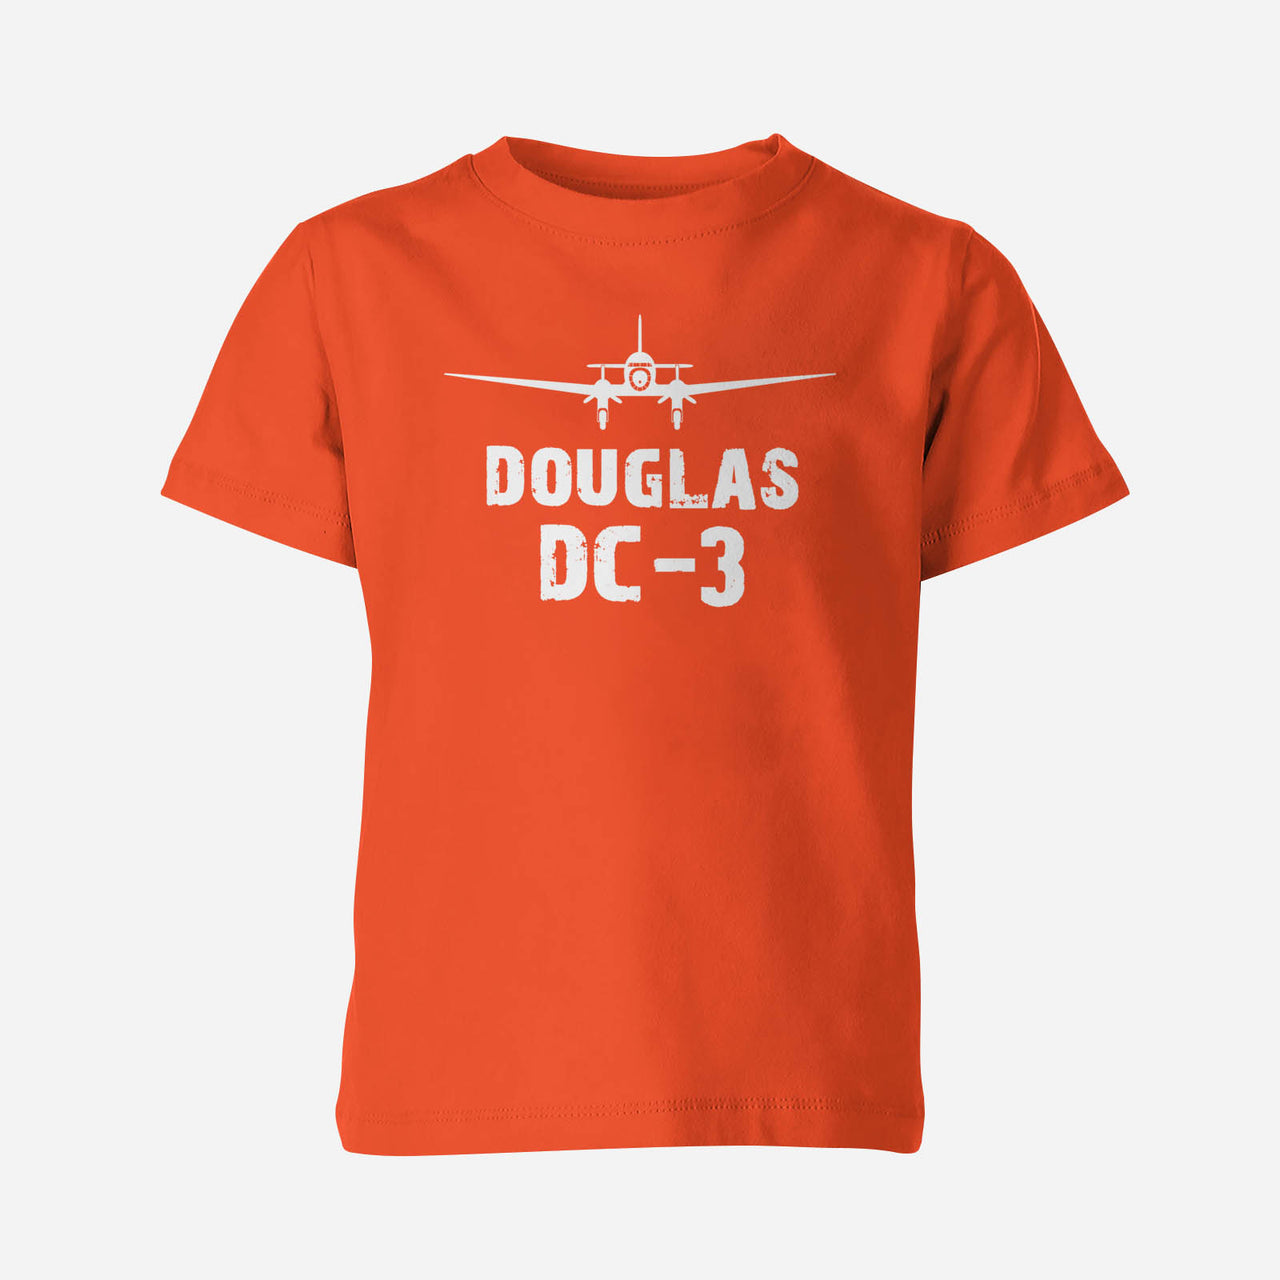 Douglas DC-3 & Plane Designed Children T-Shirts